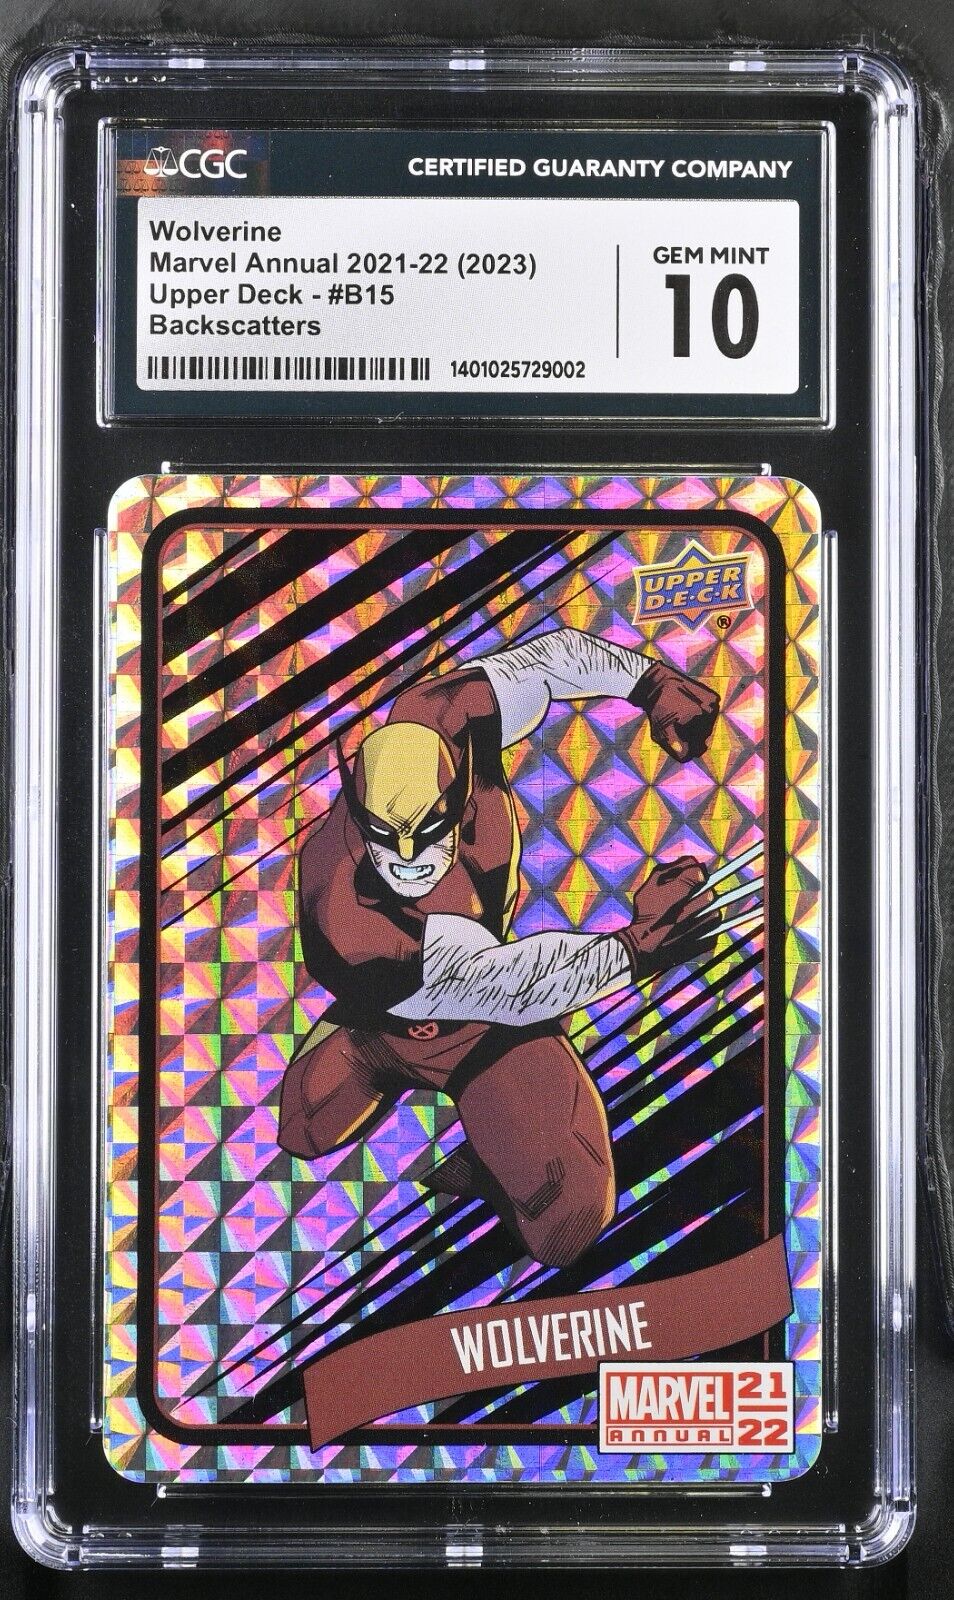 2021-22 Upper Deck Marvel Annual Backscatters Wolverine #B15 CGC Gem Mint 10